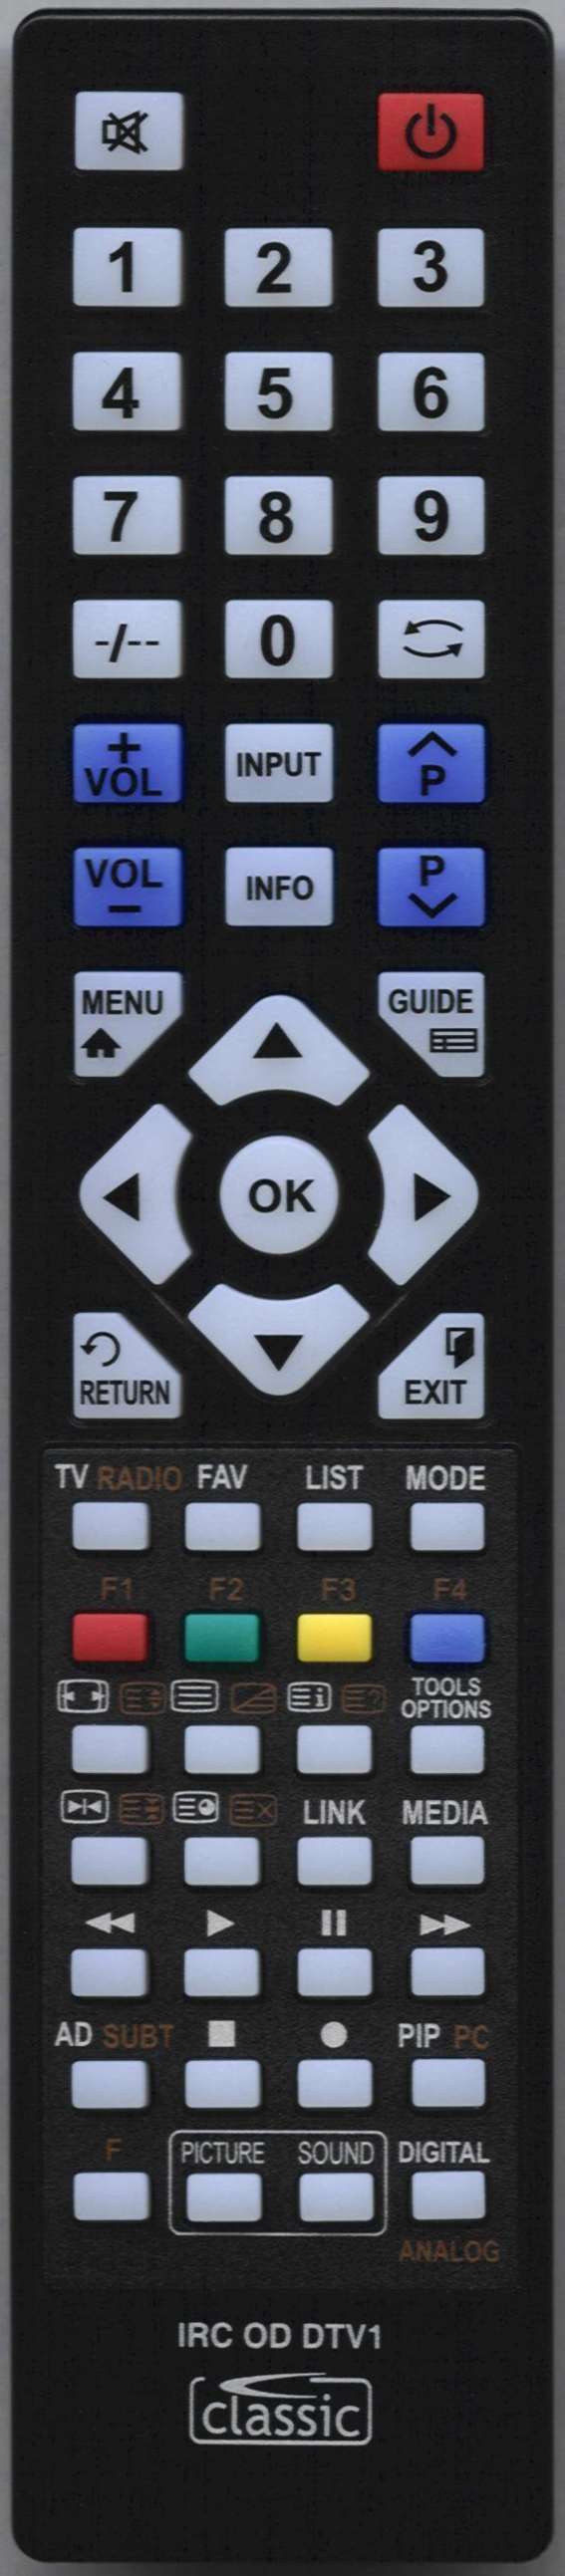 Kenmark LVD1587D Remote Control